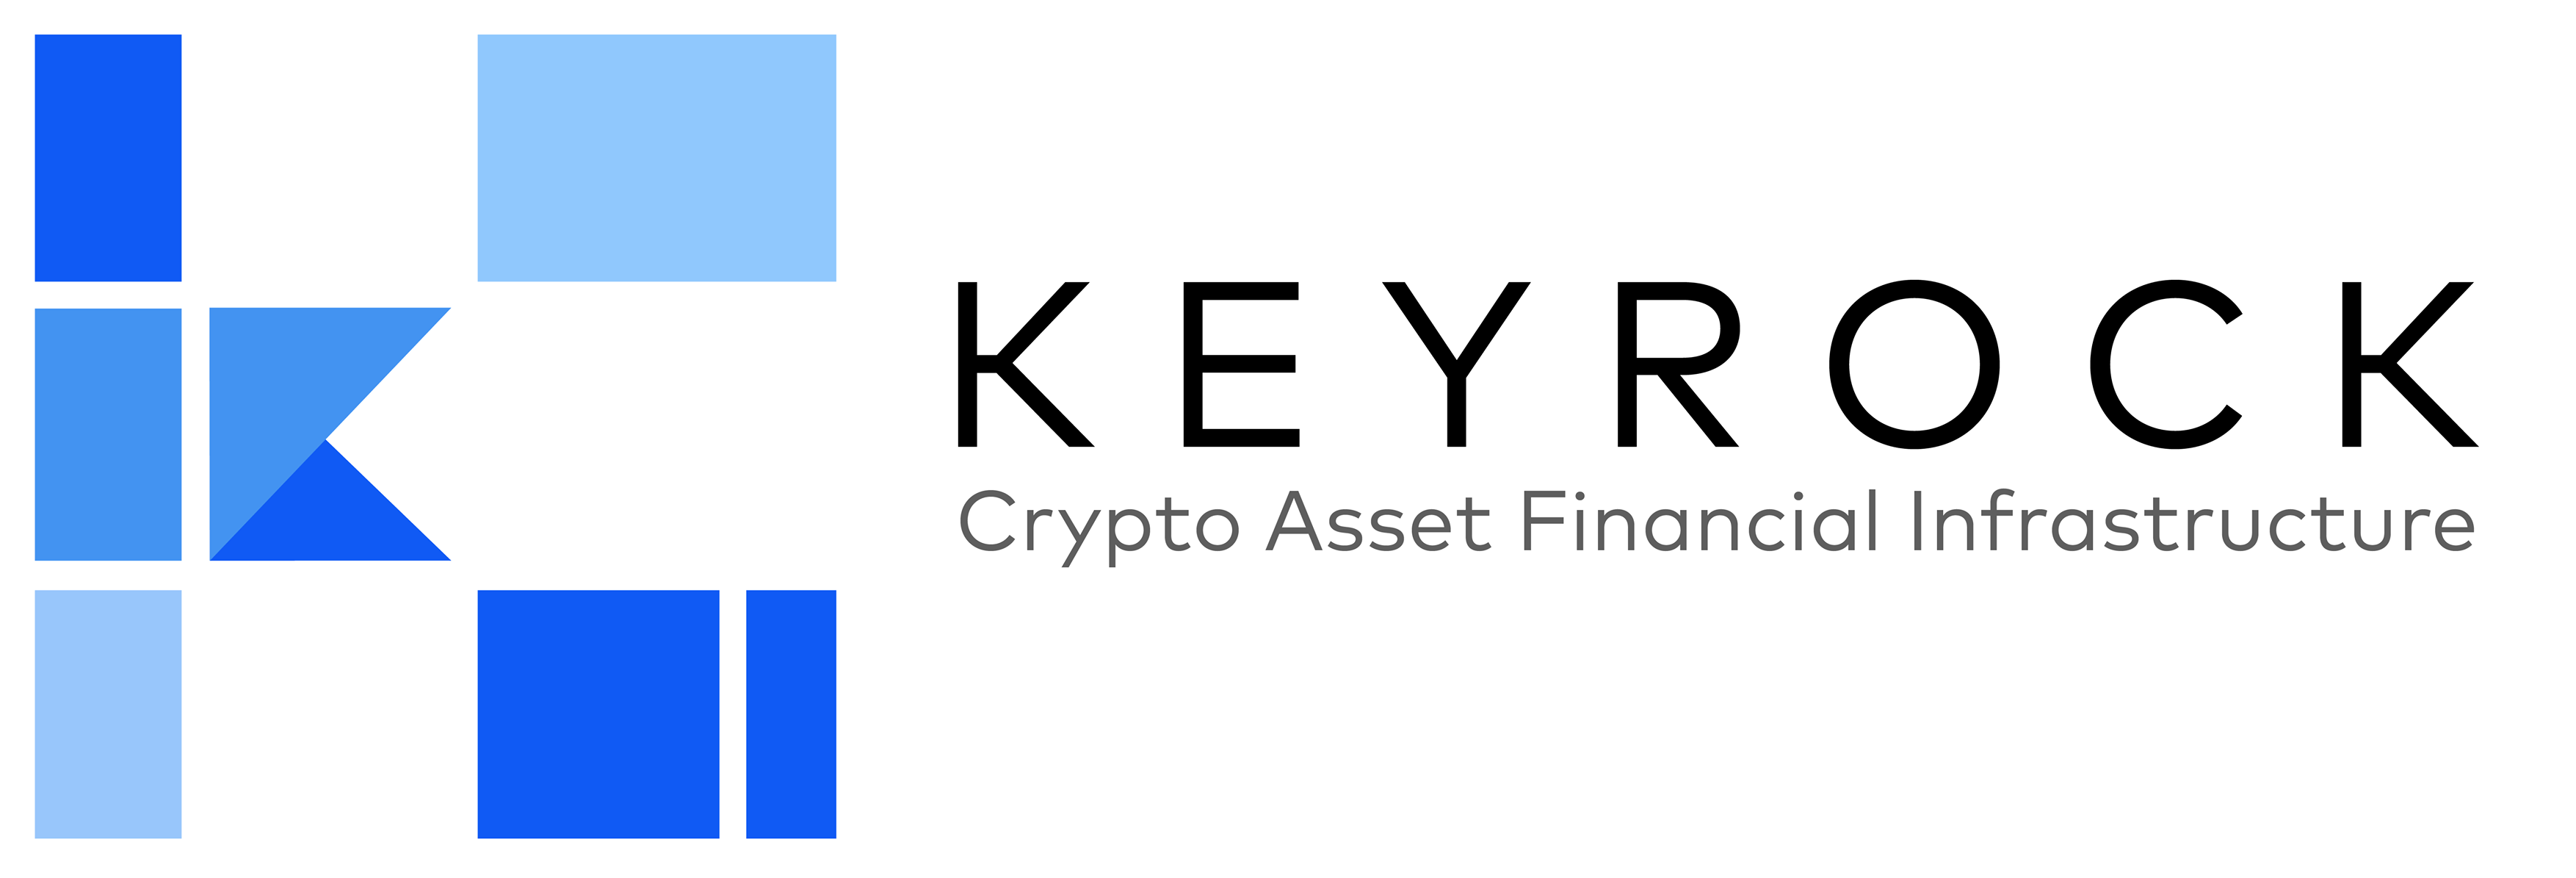 Crypto Market Maker Keyrock Raises $72 Million In Funding Round 